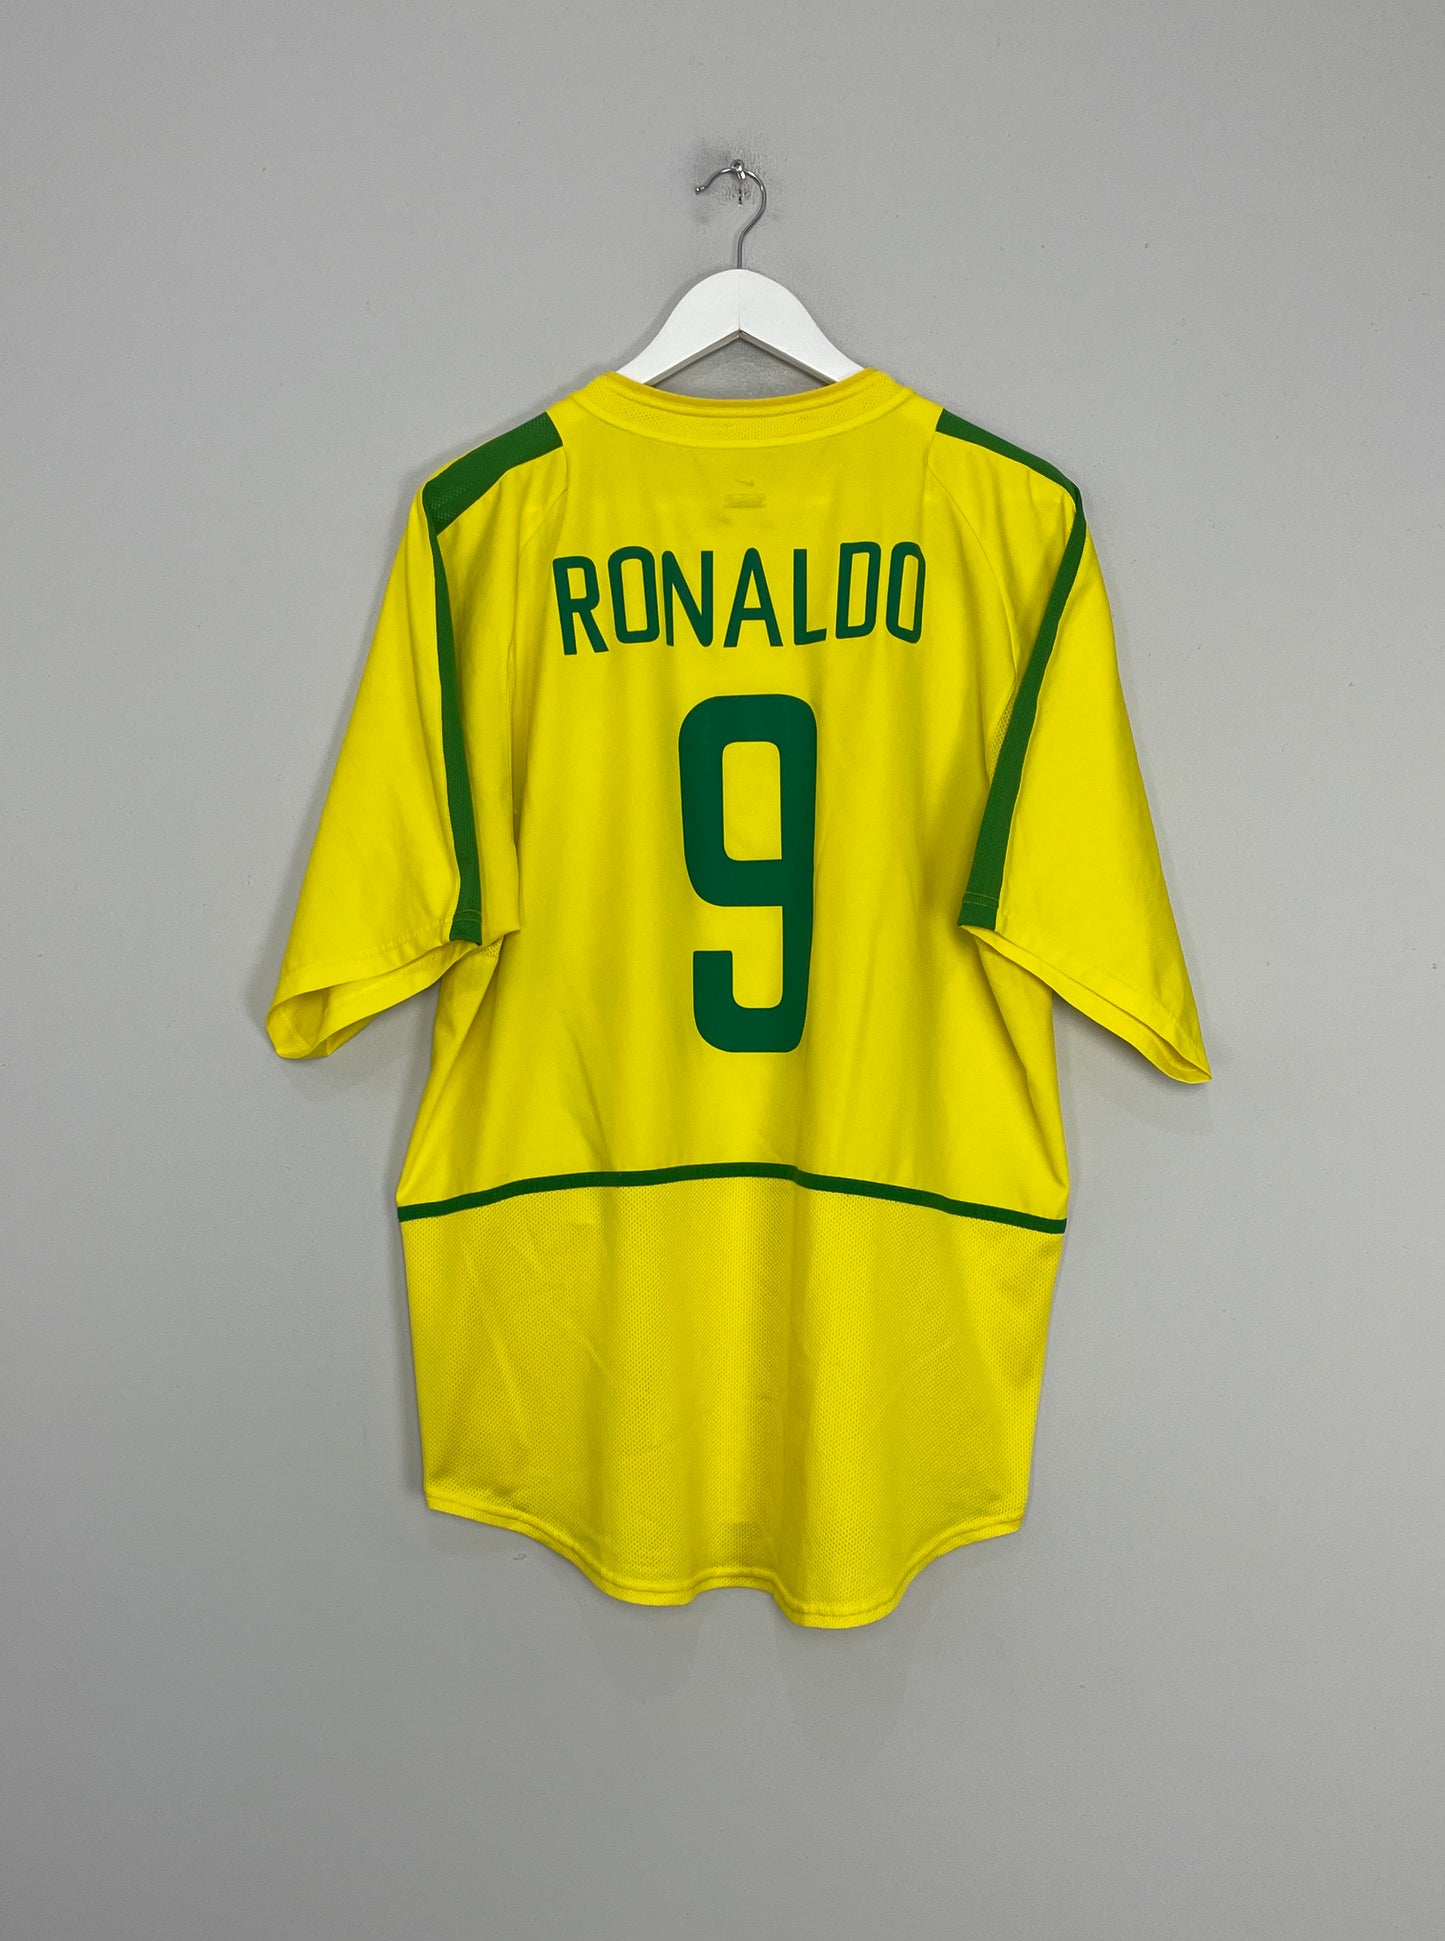 Image of the Brazil Ronaldo shirt from the 2002/04 season